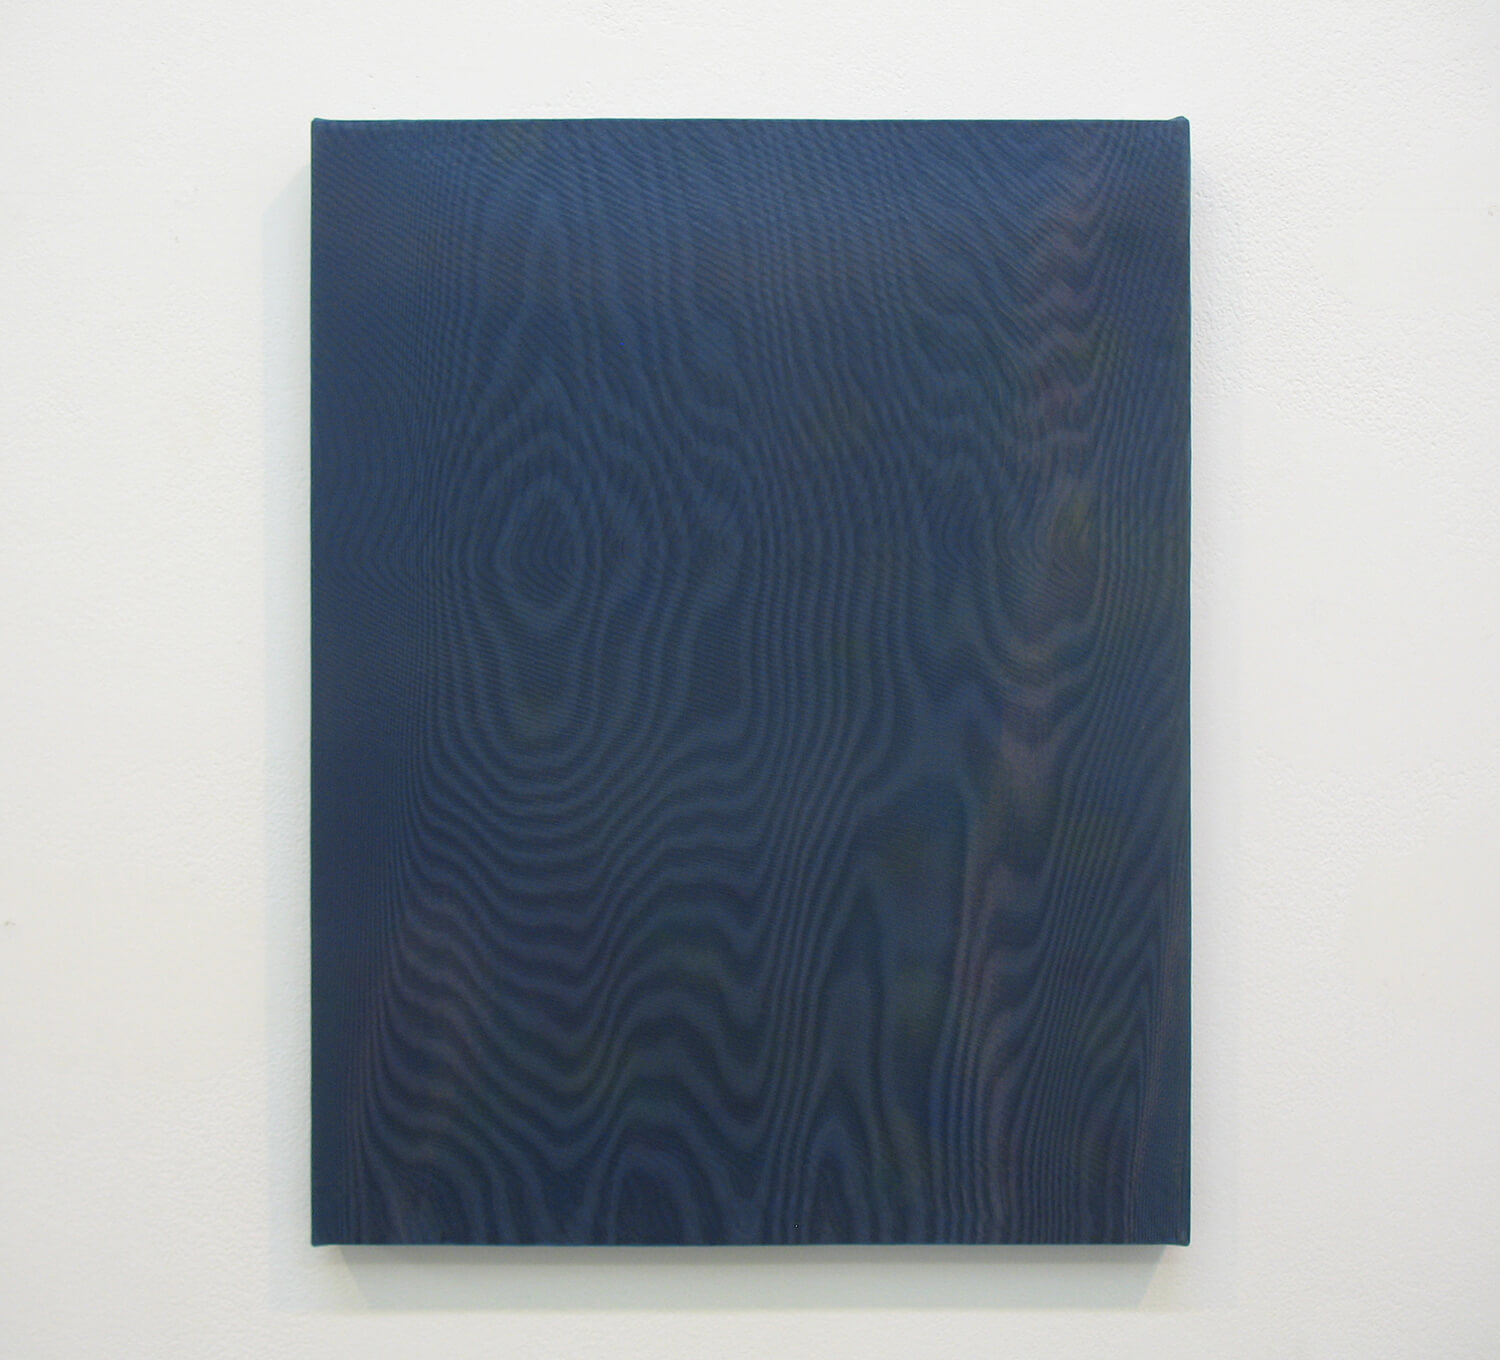 drops #2<br>
Acrylic, glass organdy, cotton, panel 41 x 33 cm 2013